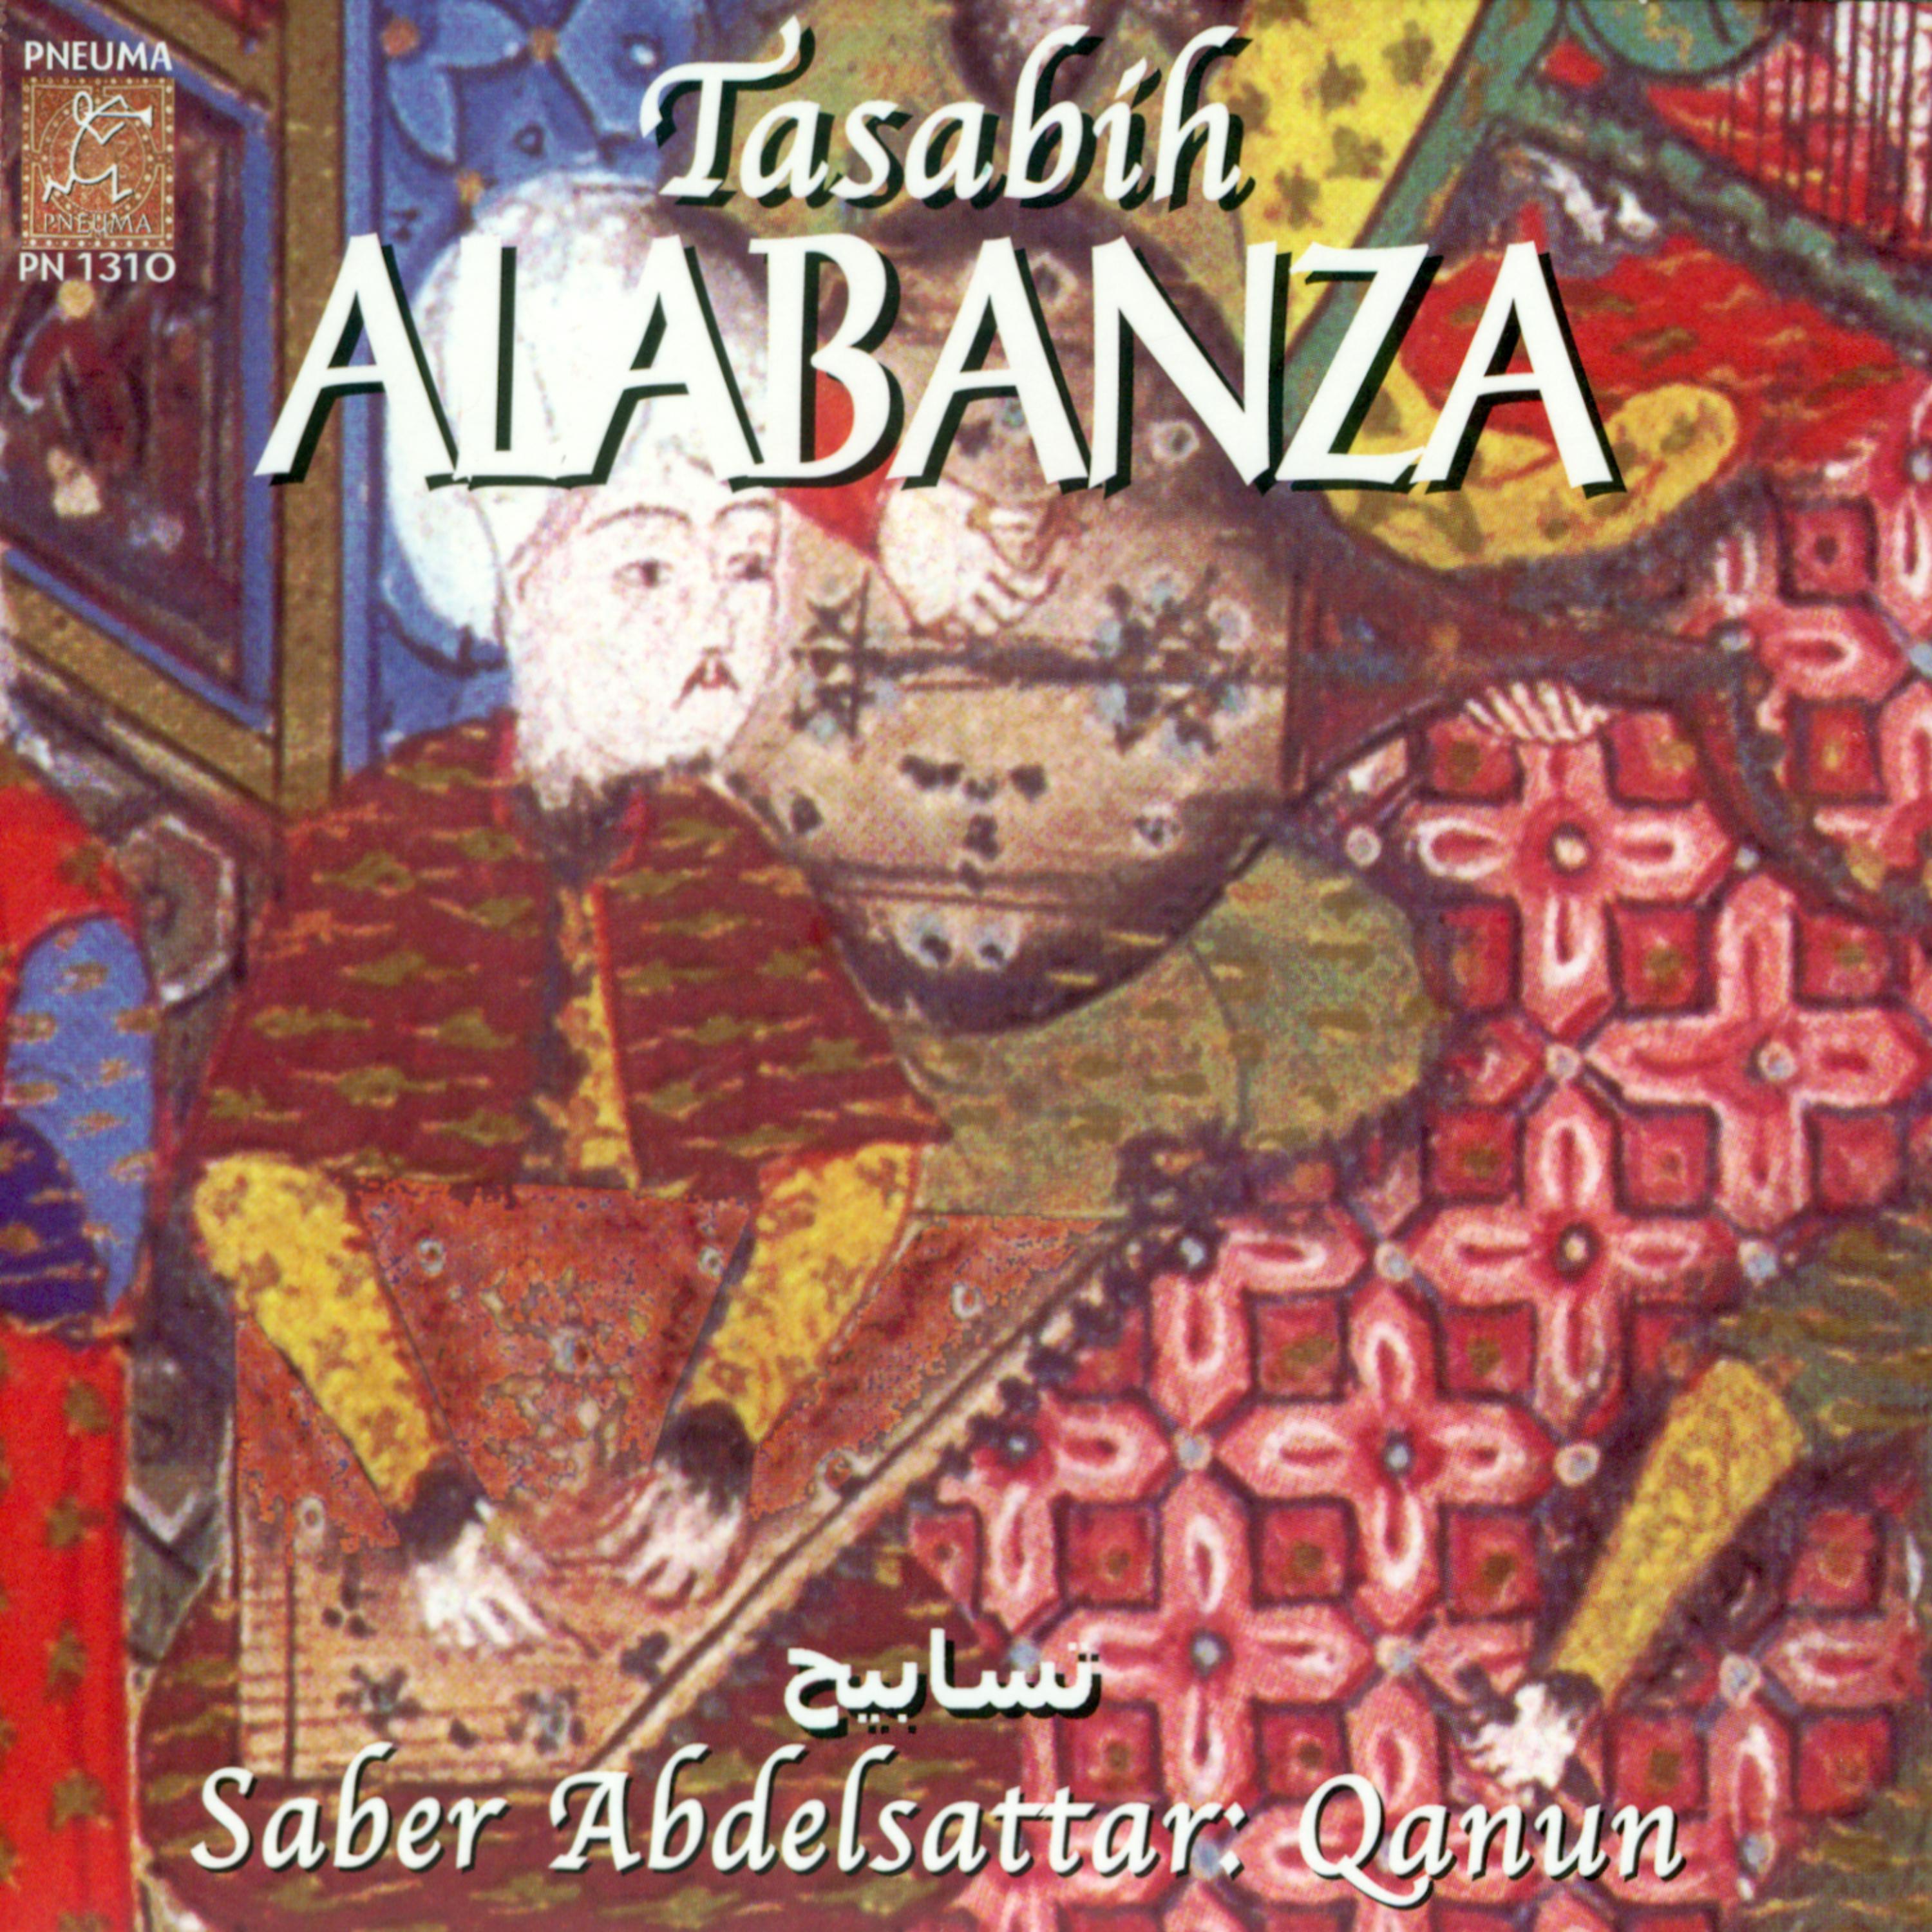 Постер альбома Alabanza - Tasabih